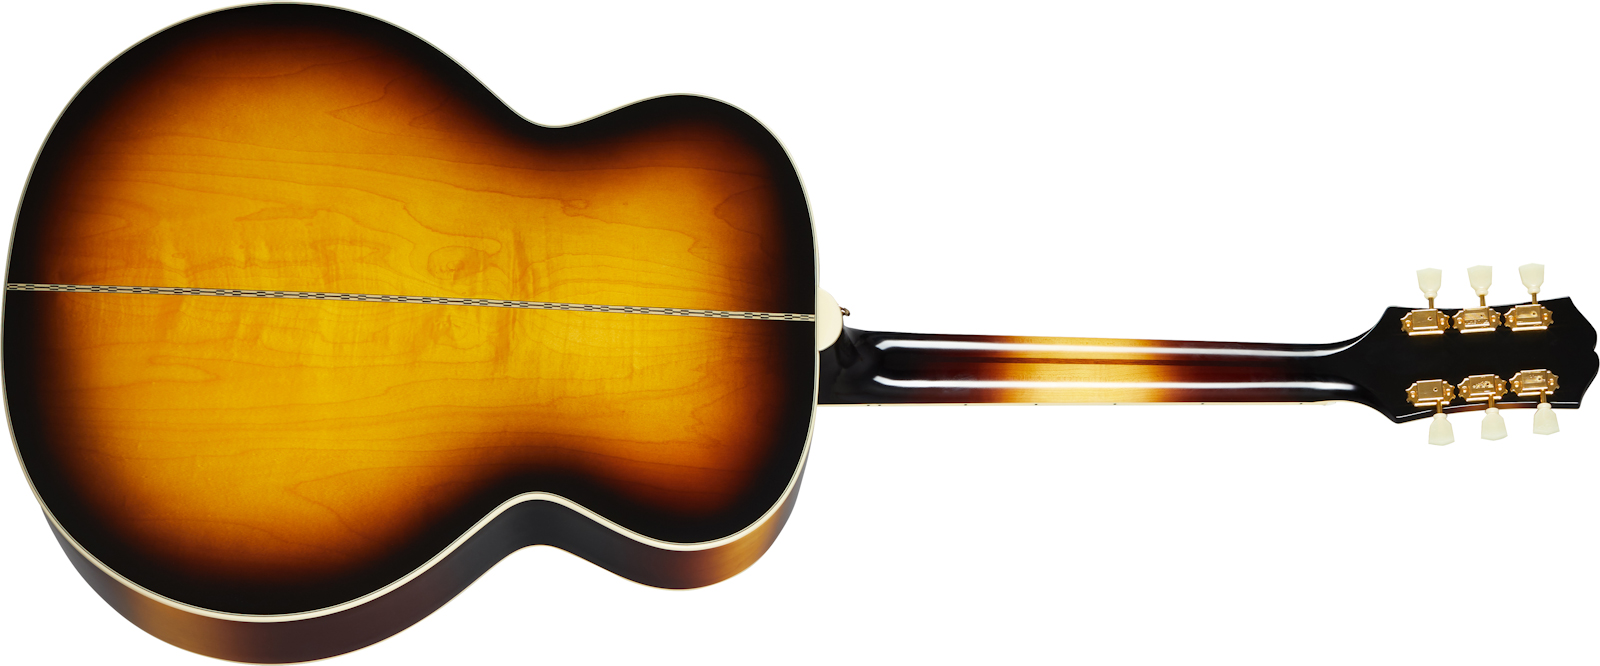 Epiphone J-200 Inspired By Gibson Jumbo Epicea Erable Lau - Aged Vintage Sunburst - Guitare Electro Acoustique - Variation 1